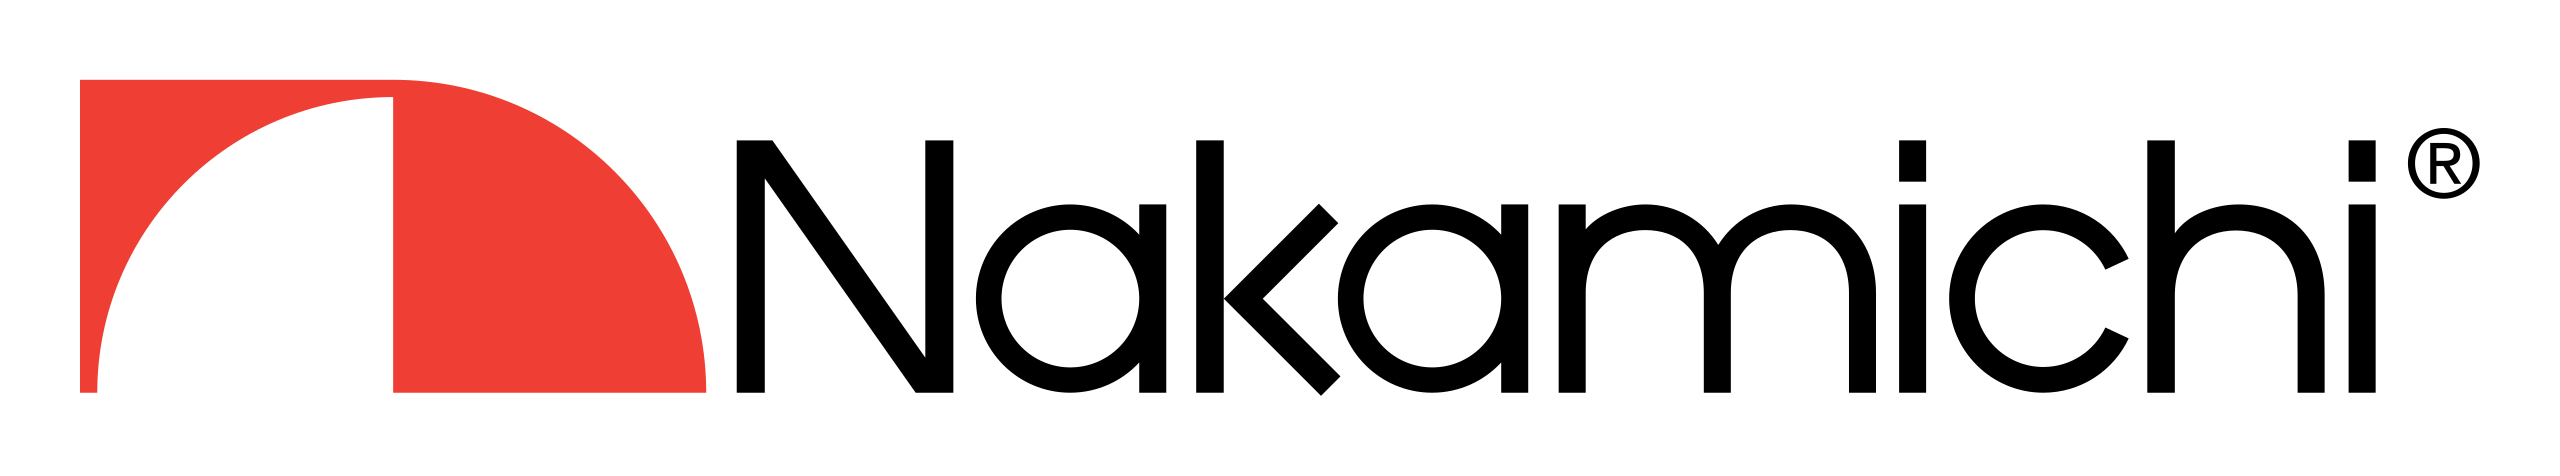 Nakamichi logo